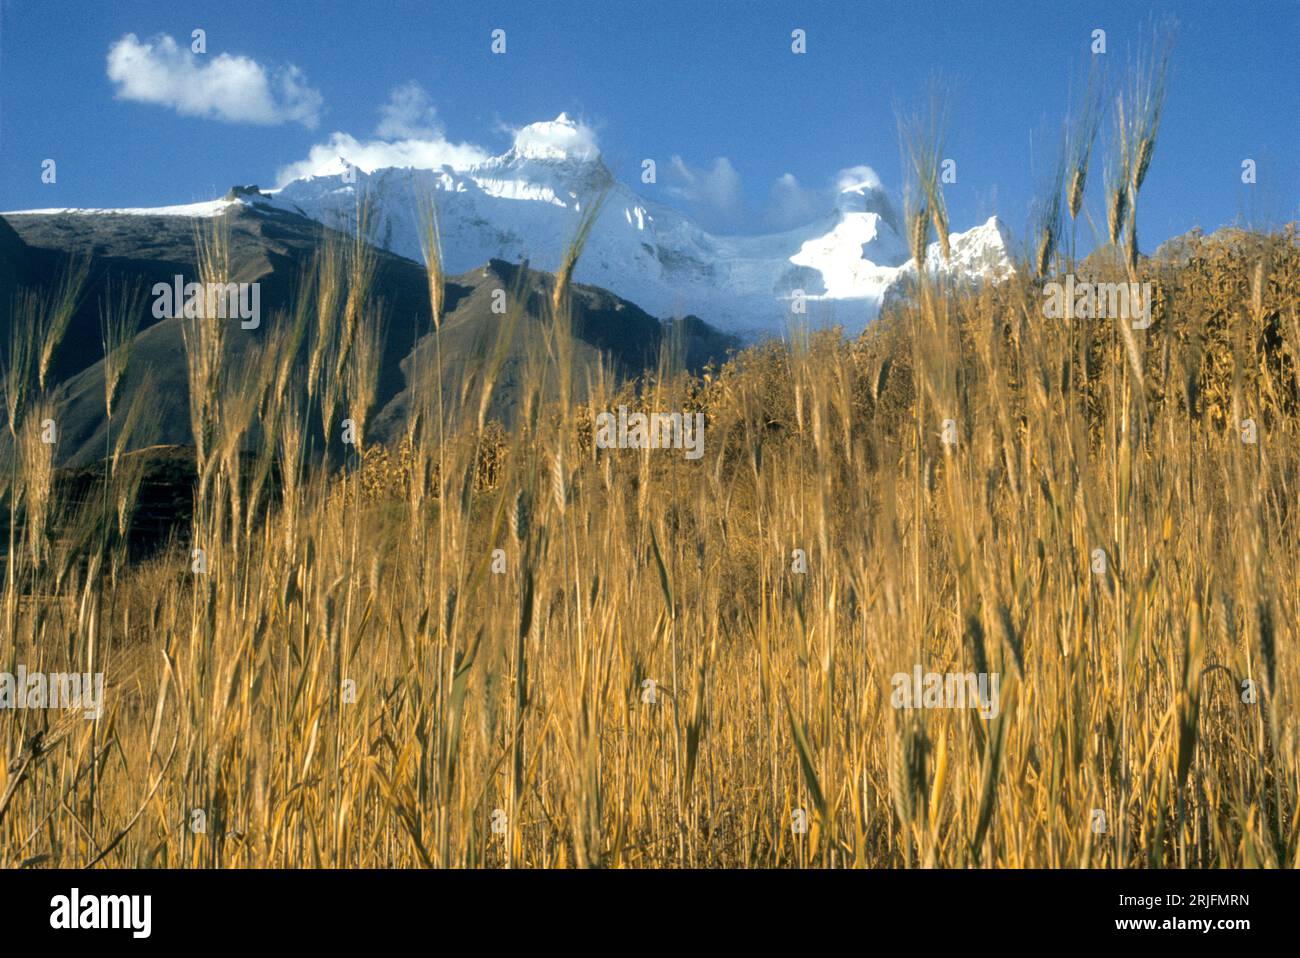 Peru, Andes Montain Range, Cordillera de los Andes, Cordillera Blanca Wheat field withh mount Huandoy in background. Stock Photo